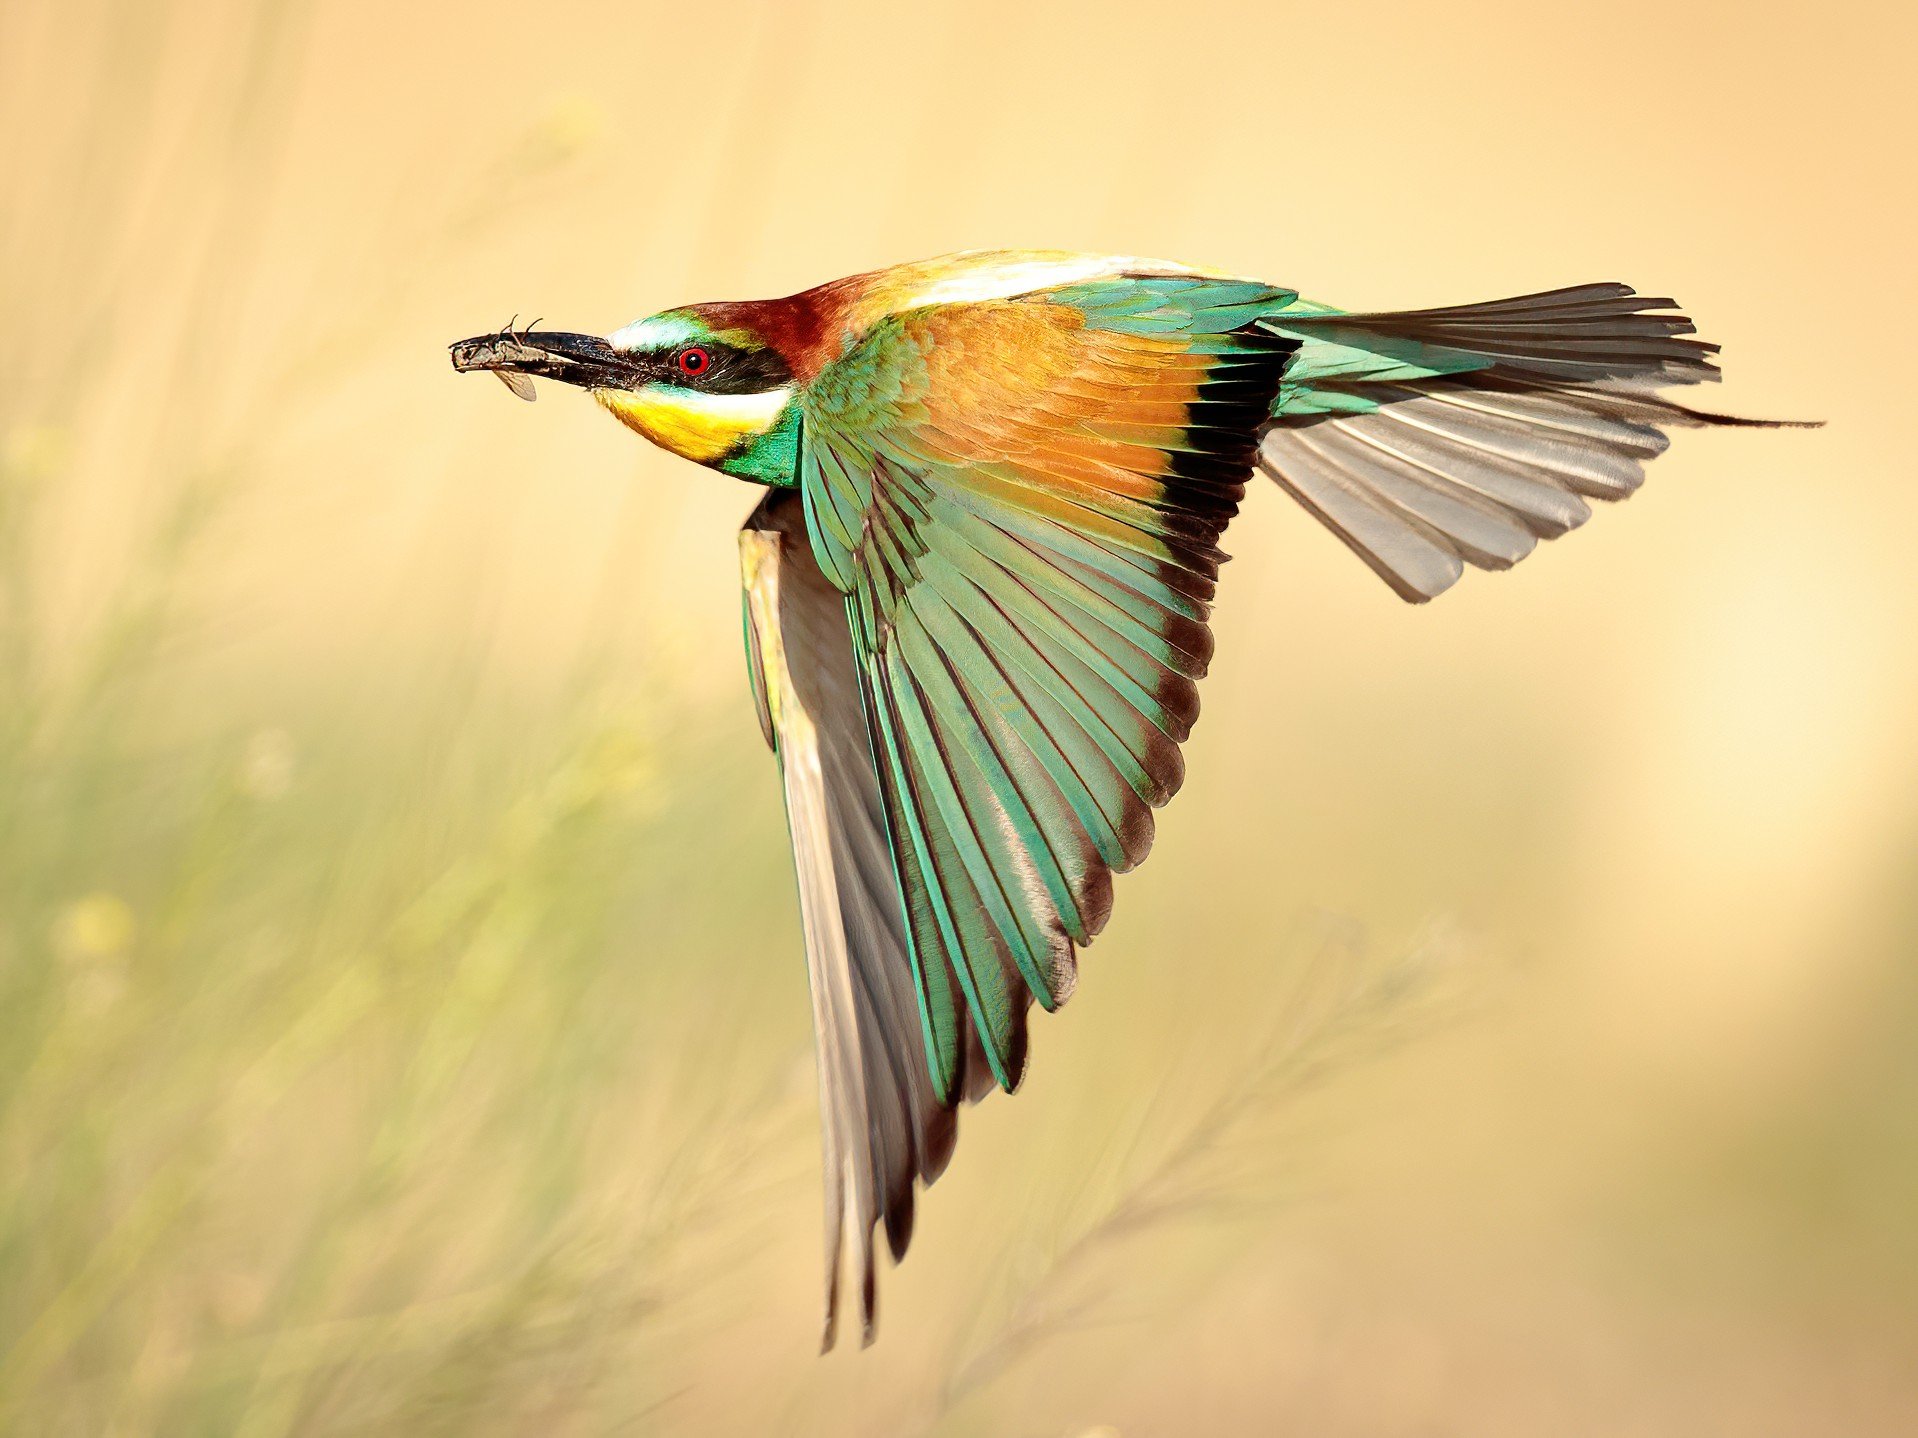 Ecotours Kondorecolodge.hu-European Bee-eater-Bird-Wildlife-Photography Tour-Paul Novak-SharpenAI-Motion